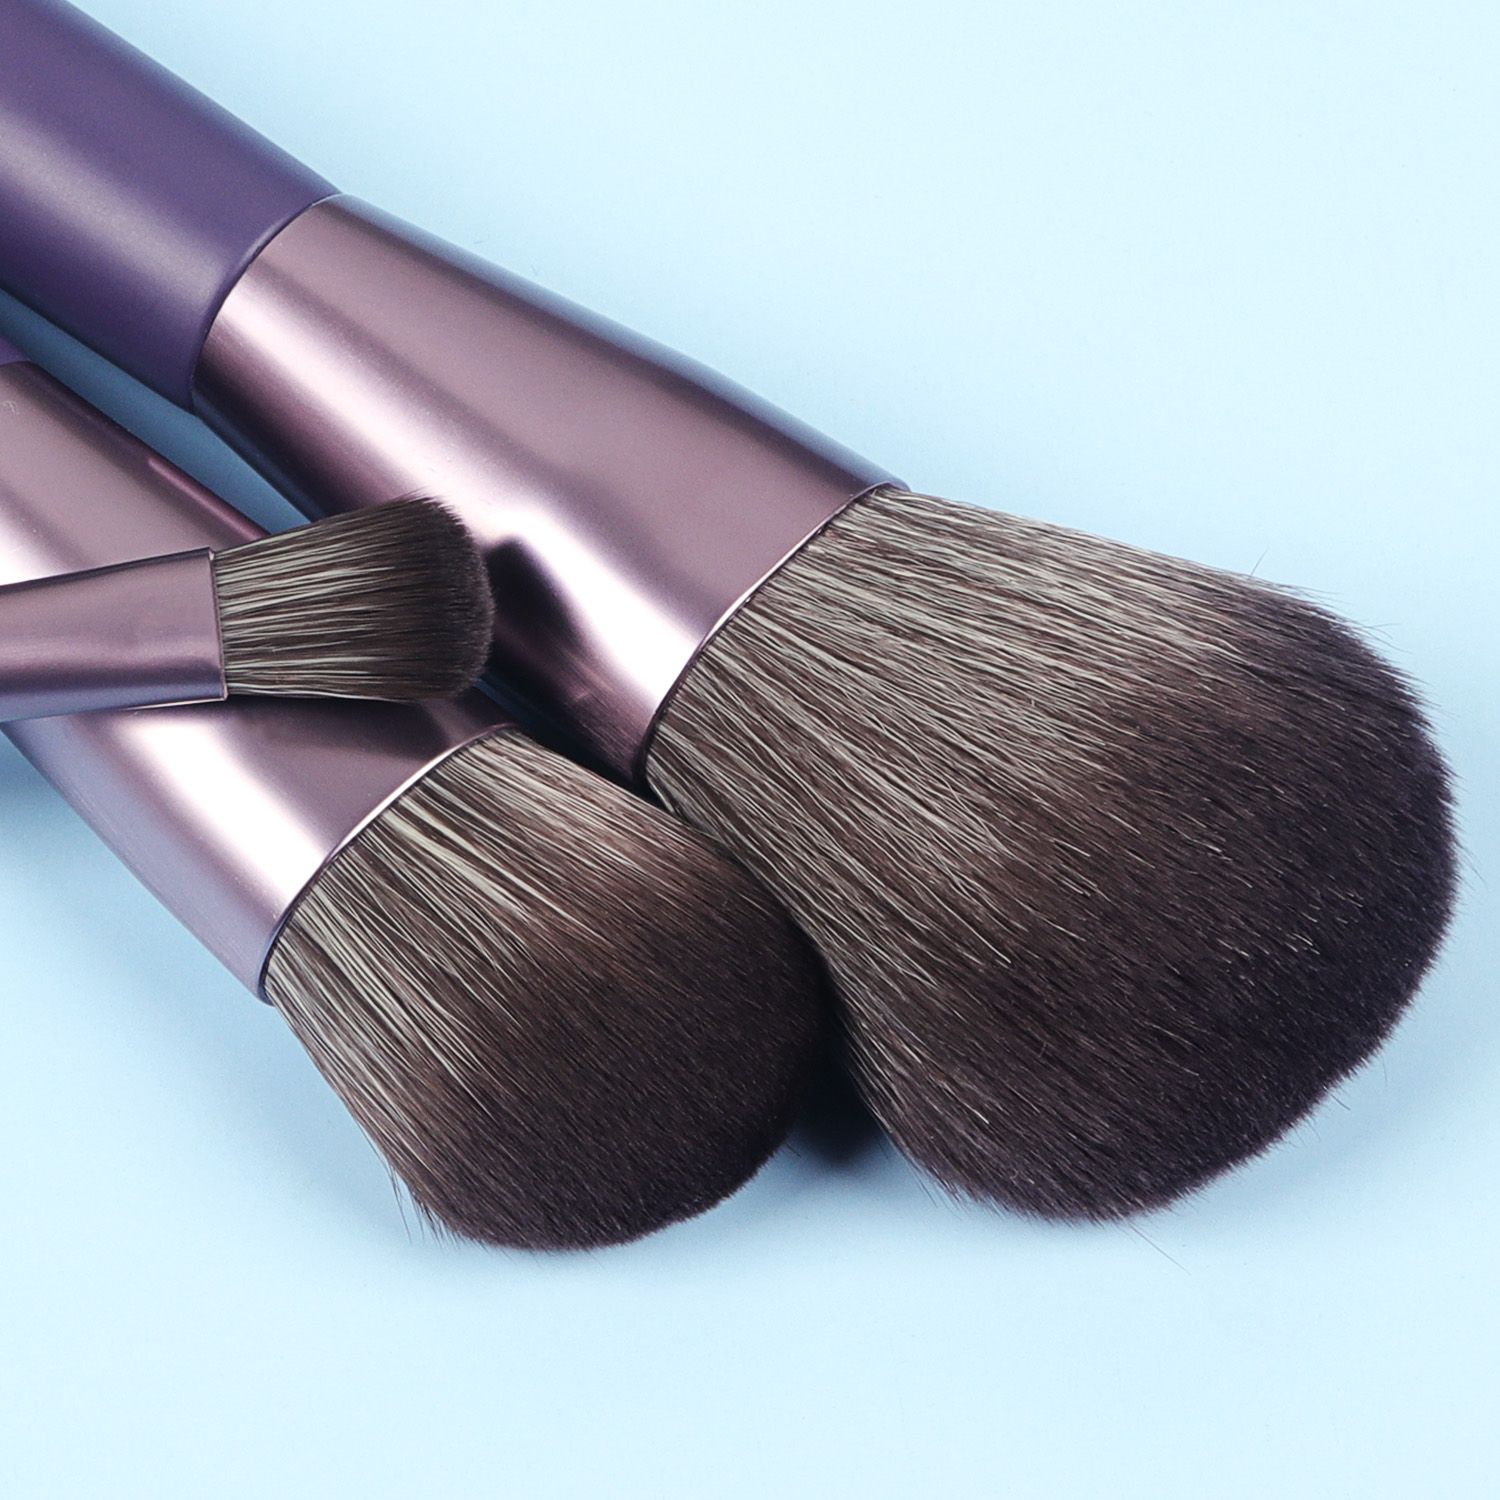 Makeup brush set full set of soft hair beginner makeup brush, eye shadow brush powder powder brush foundation makeup brush.